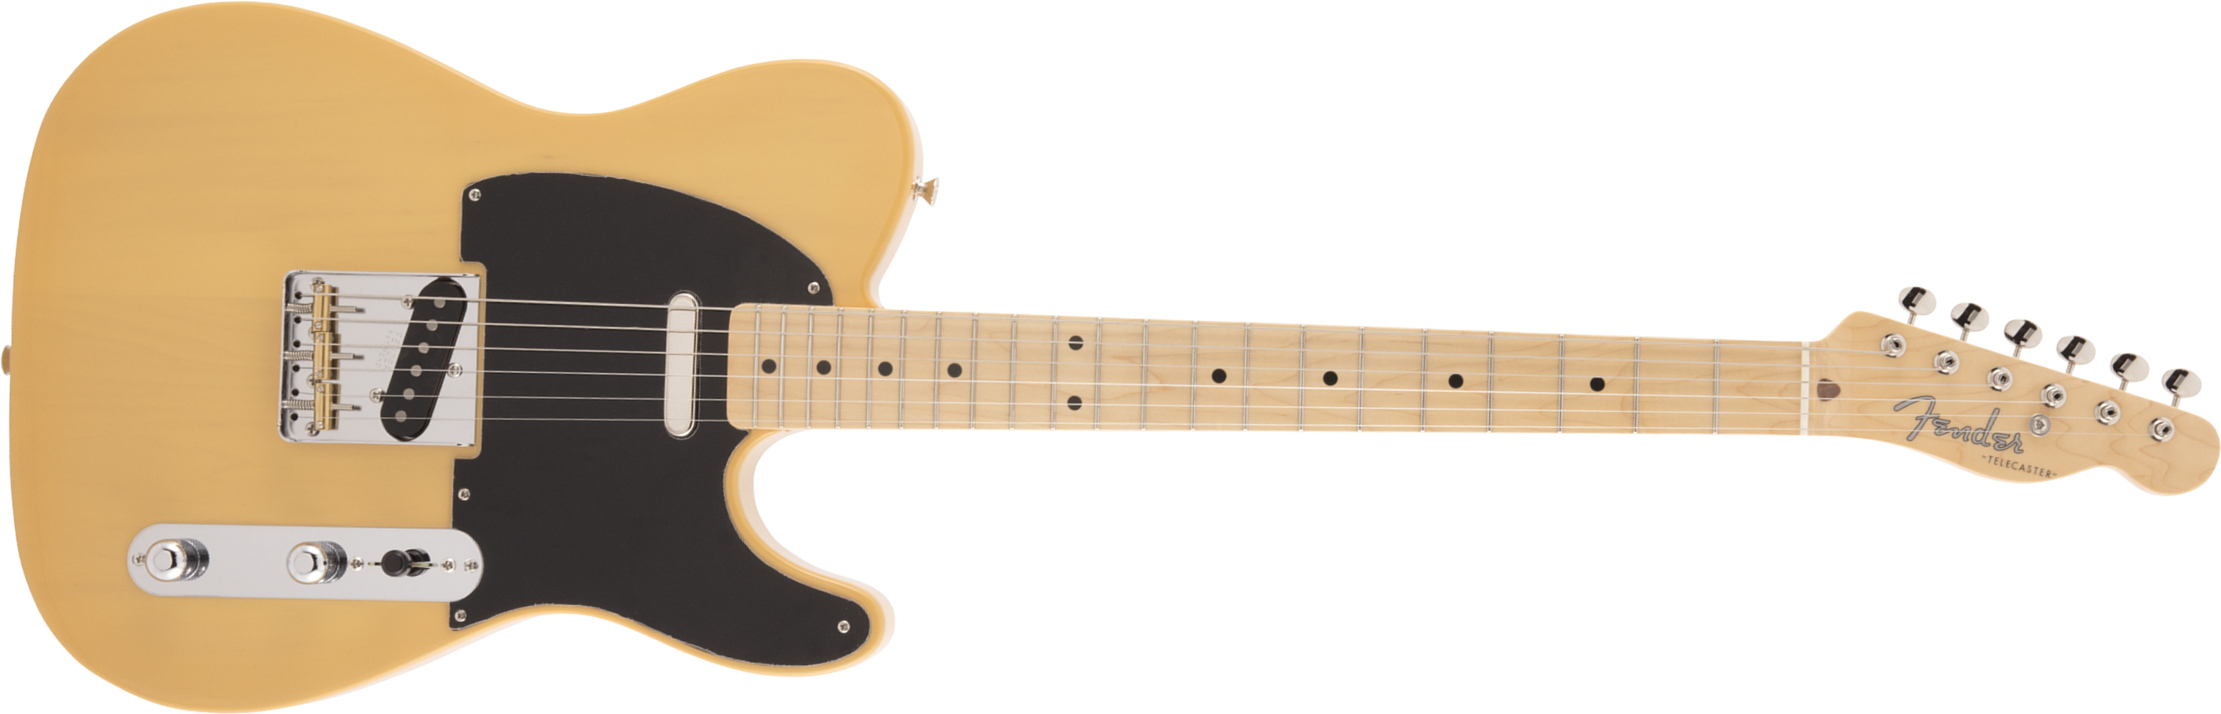 Fender Tele Traditional 50s Jap Mn - Butterscotch Blonde - Tel shape electric guitar - Main picture